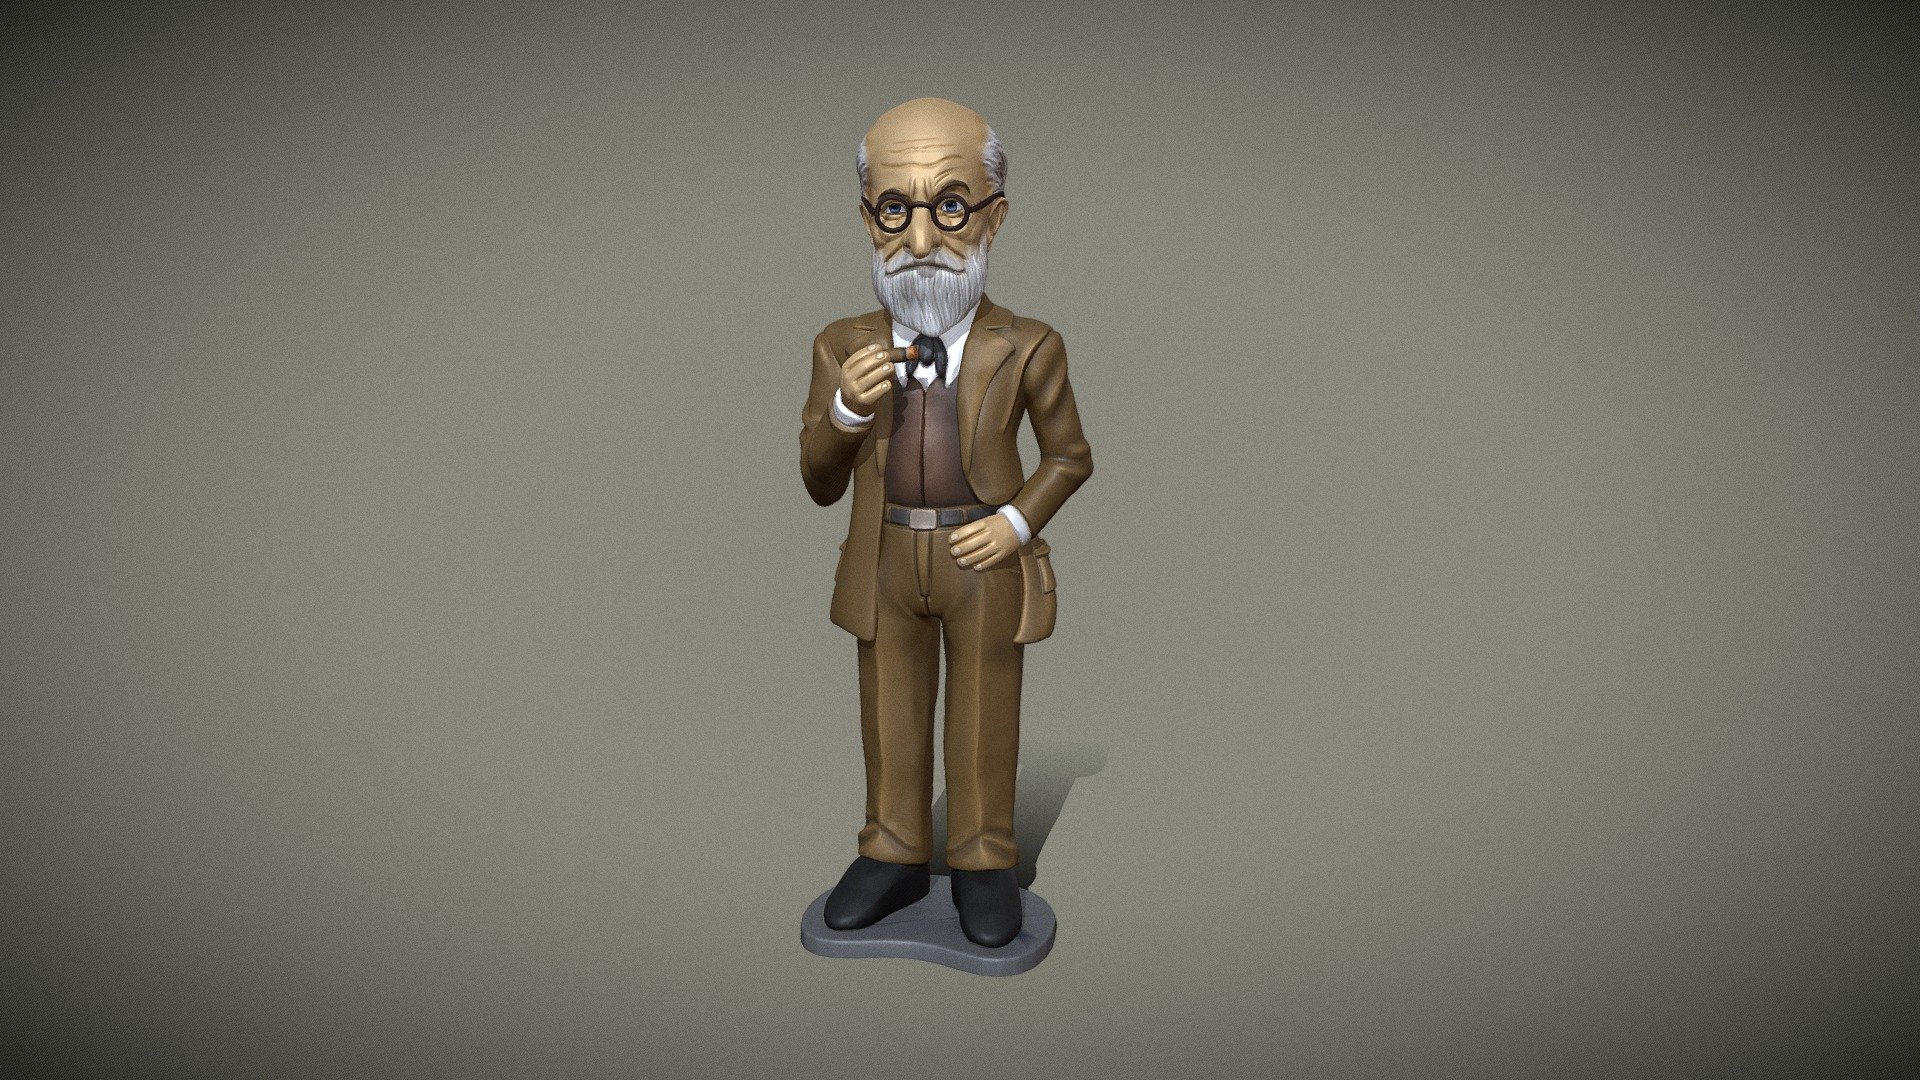 Sigmund Freud figurine, cartoon style for 3D printing - Sigmund Freud figurine - Buy Royalty Free 3D model by abauerenator 3d model